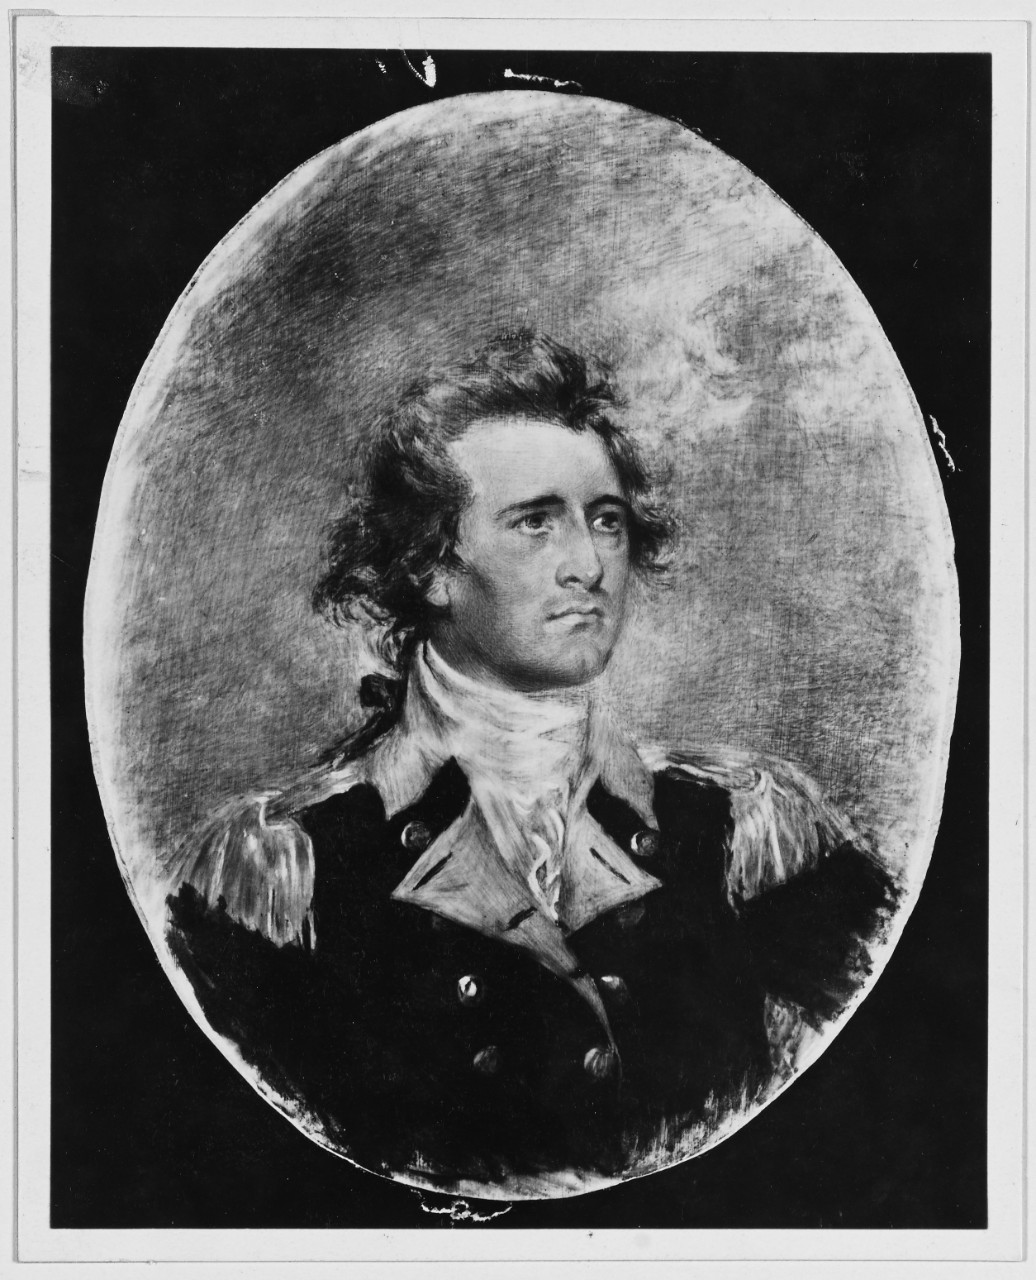 Captain William B. Shubrick, USN